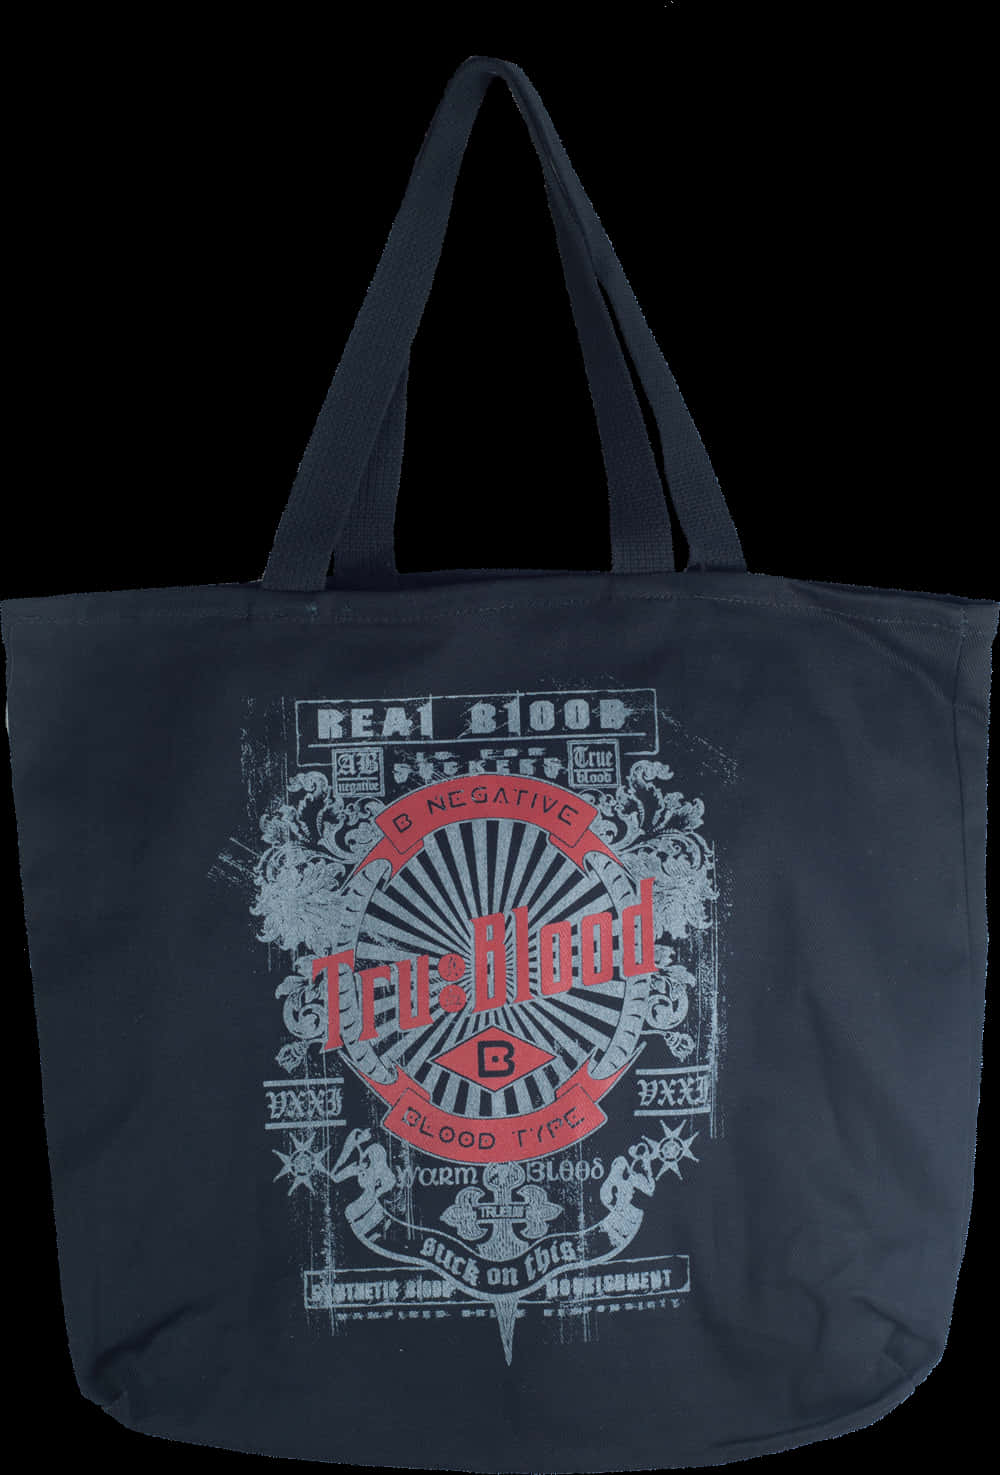 True Blood Tote Bag Graphic Print PNG image